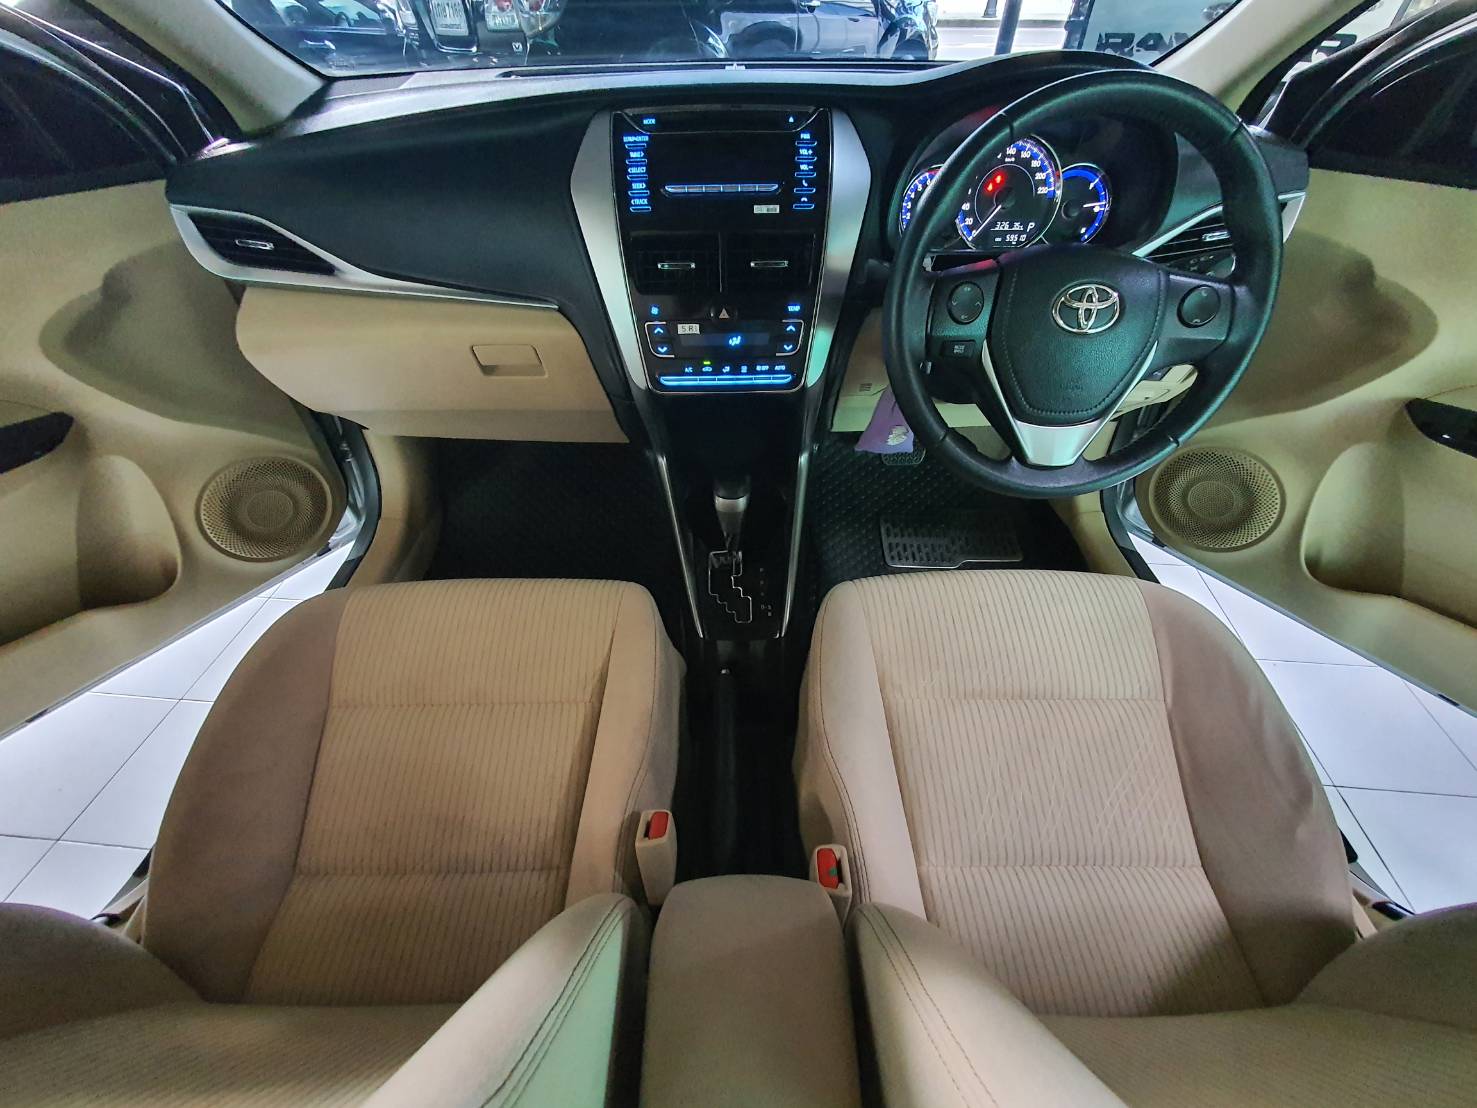 Toyota Yaris Ativ 1.2G Auto ปี 2017 สีบรอนซ์เงิน มือ1 เช็คศูนย์ ไมล์น้อย